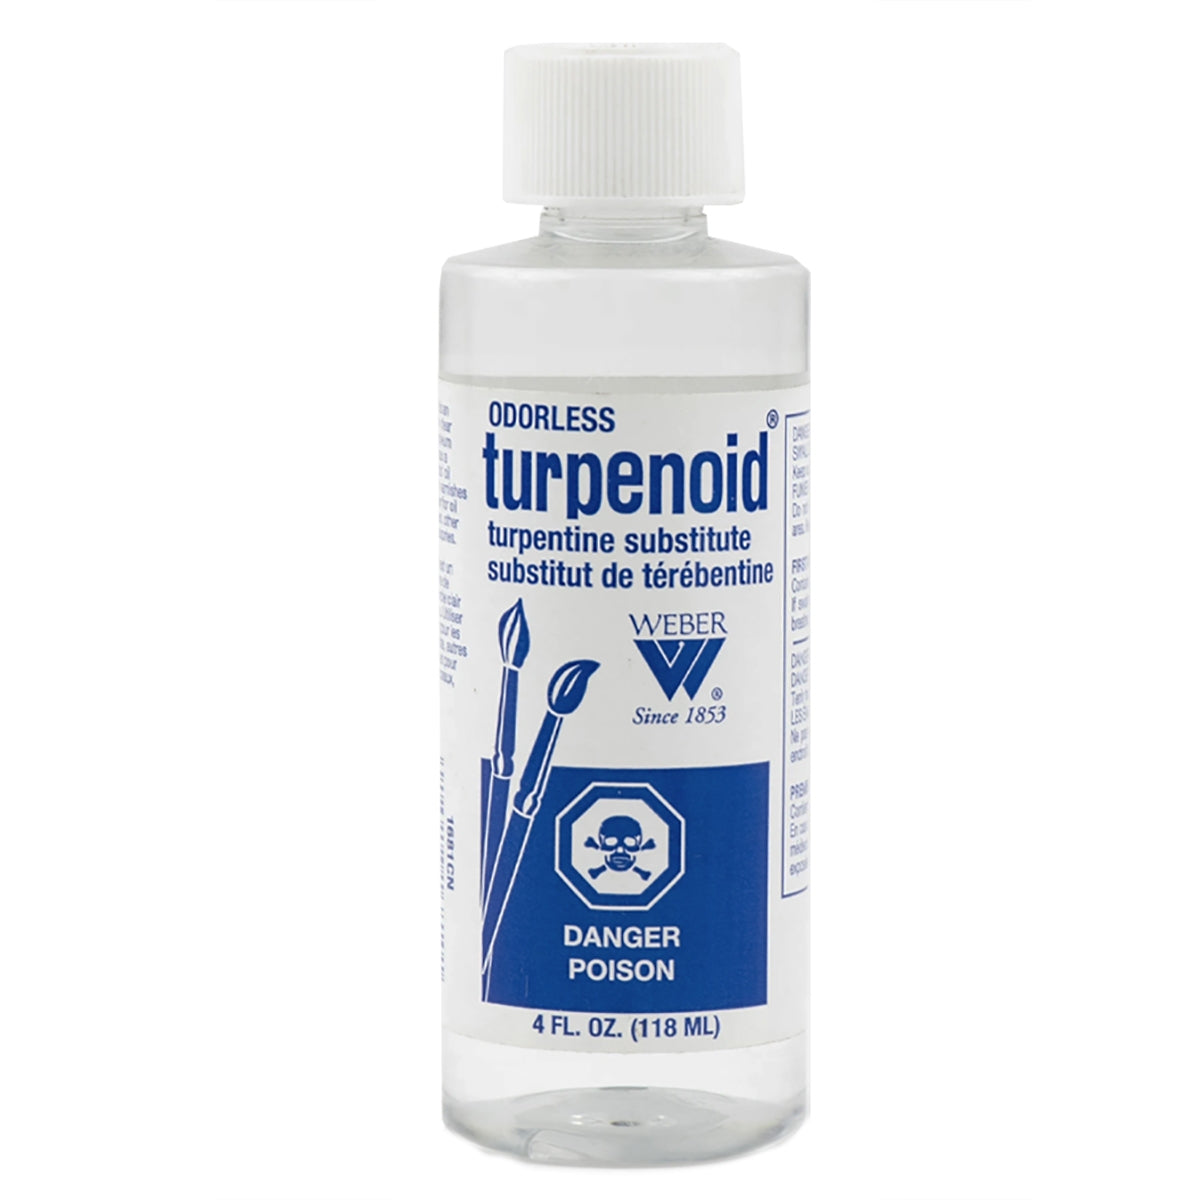 Natural Turpentine Alternatives & Healthier Options